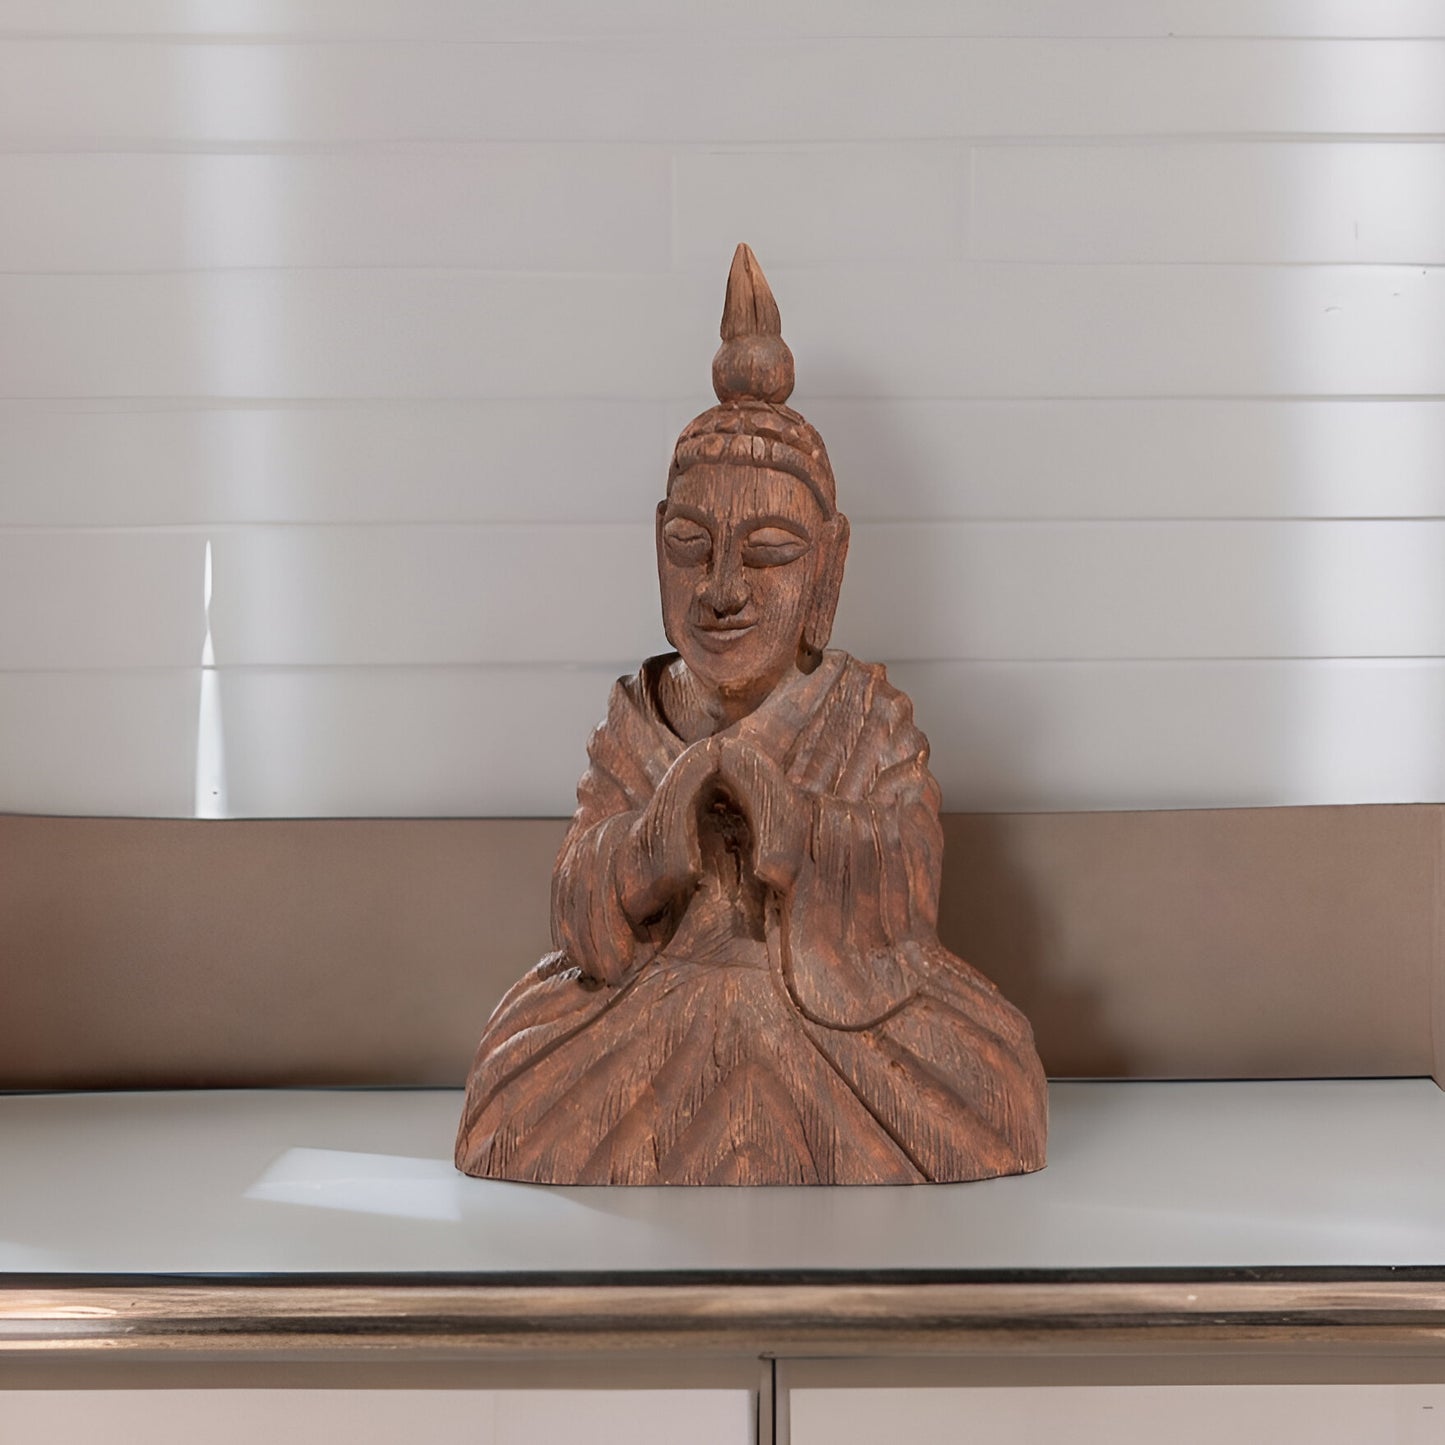 Wooden Seated Buddha Sculpture